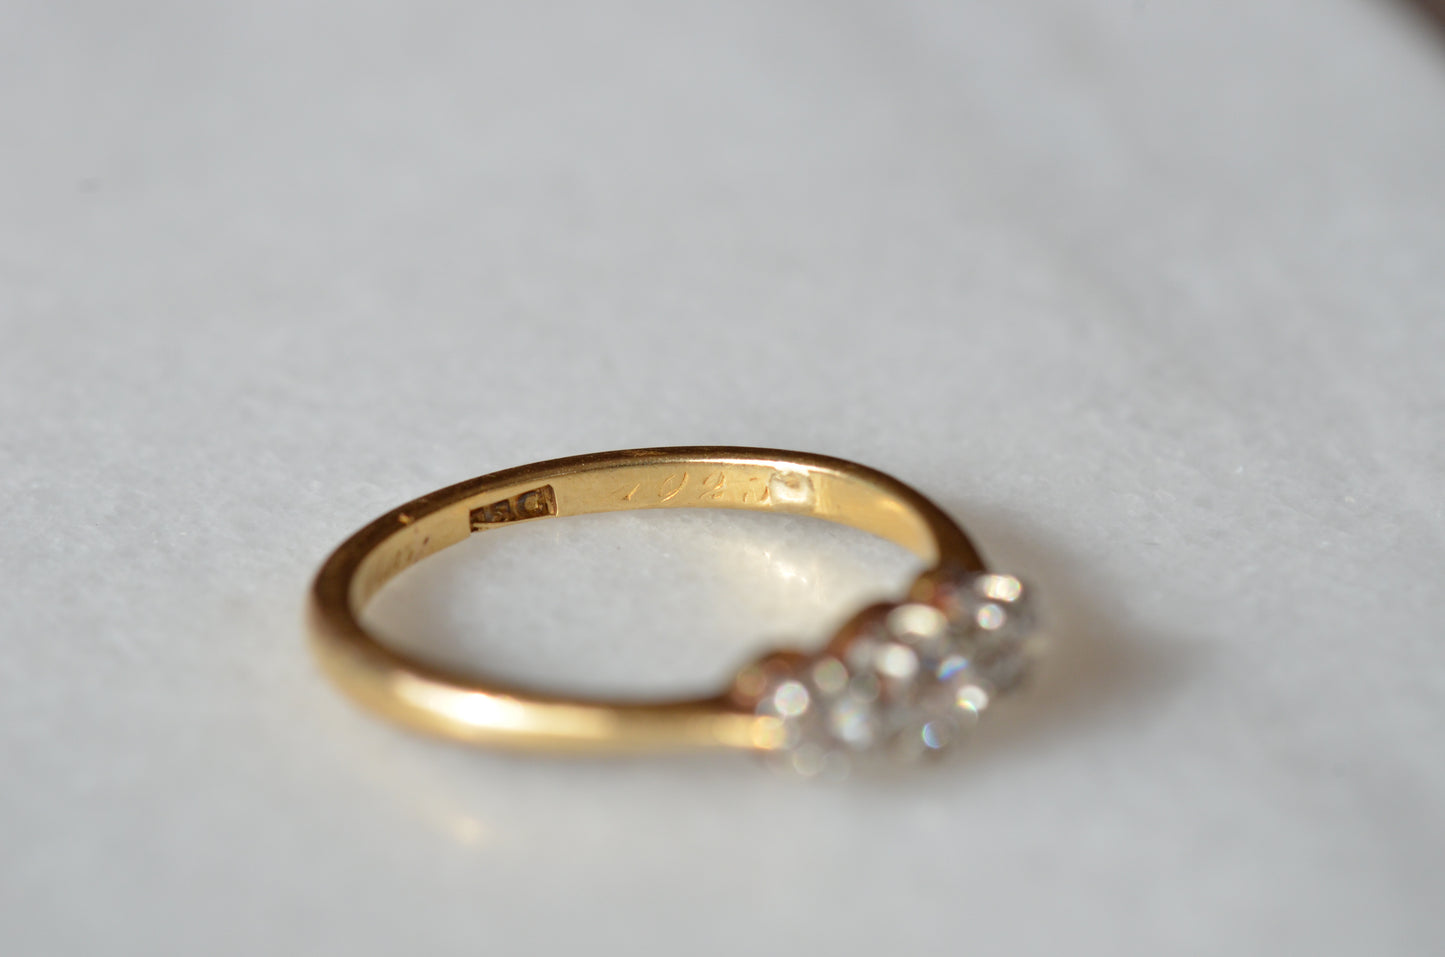 Bright Antique Diamond Trilogy Ring